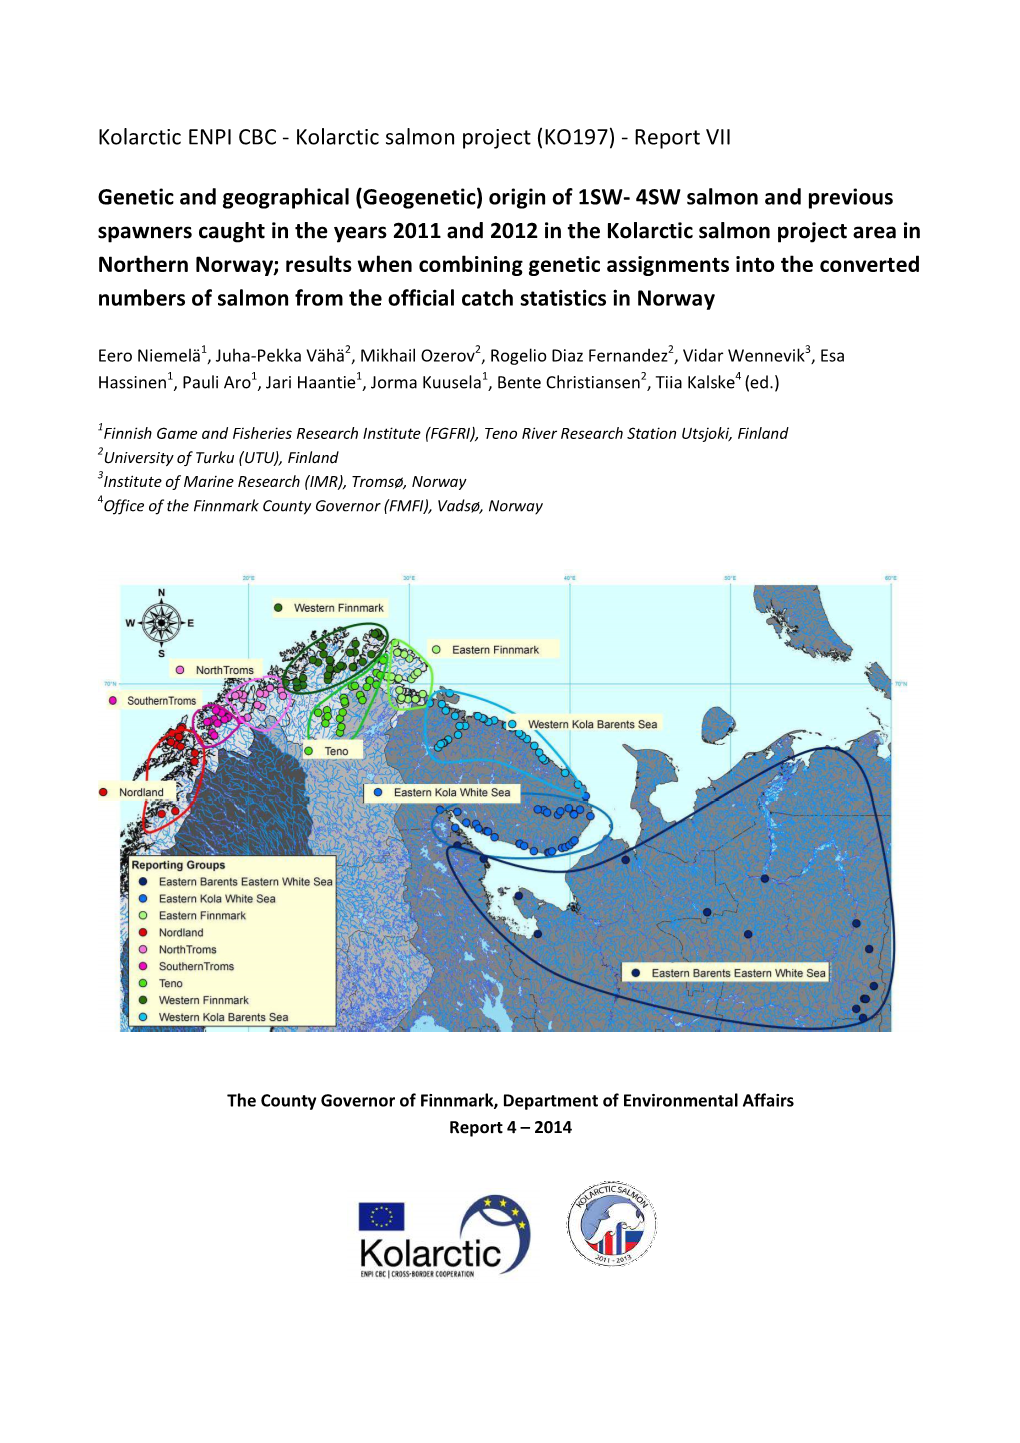 Kolarctic ENPI CBC - Kolarctic Salmon Project (KO197) - Report VII